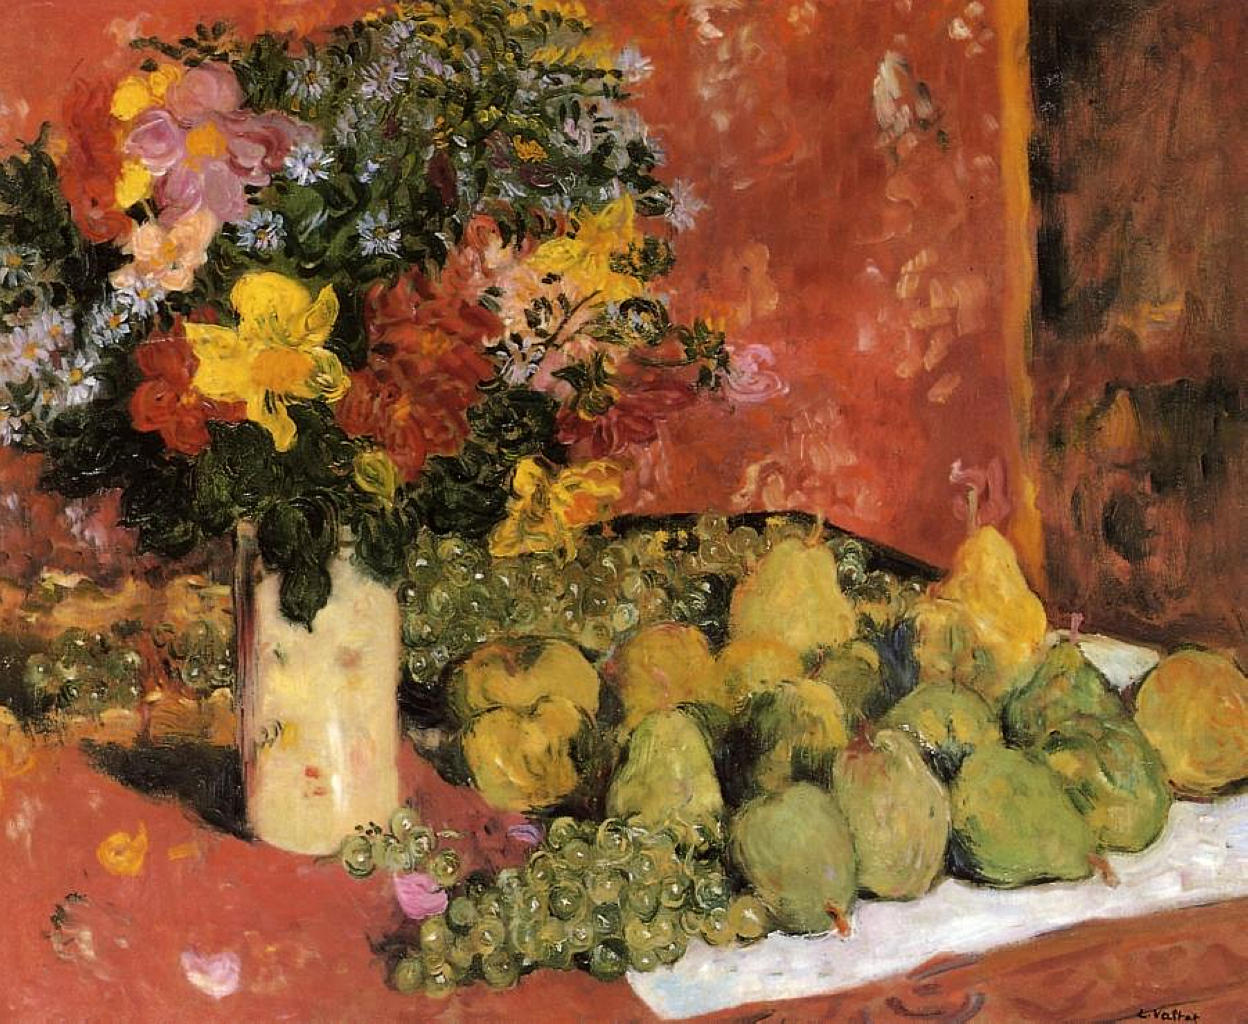 Flowers and Fruit, 1899 - Louis Valtat - www.semadata.org